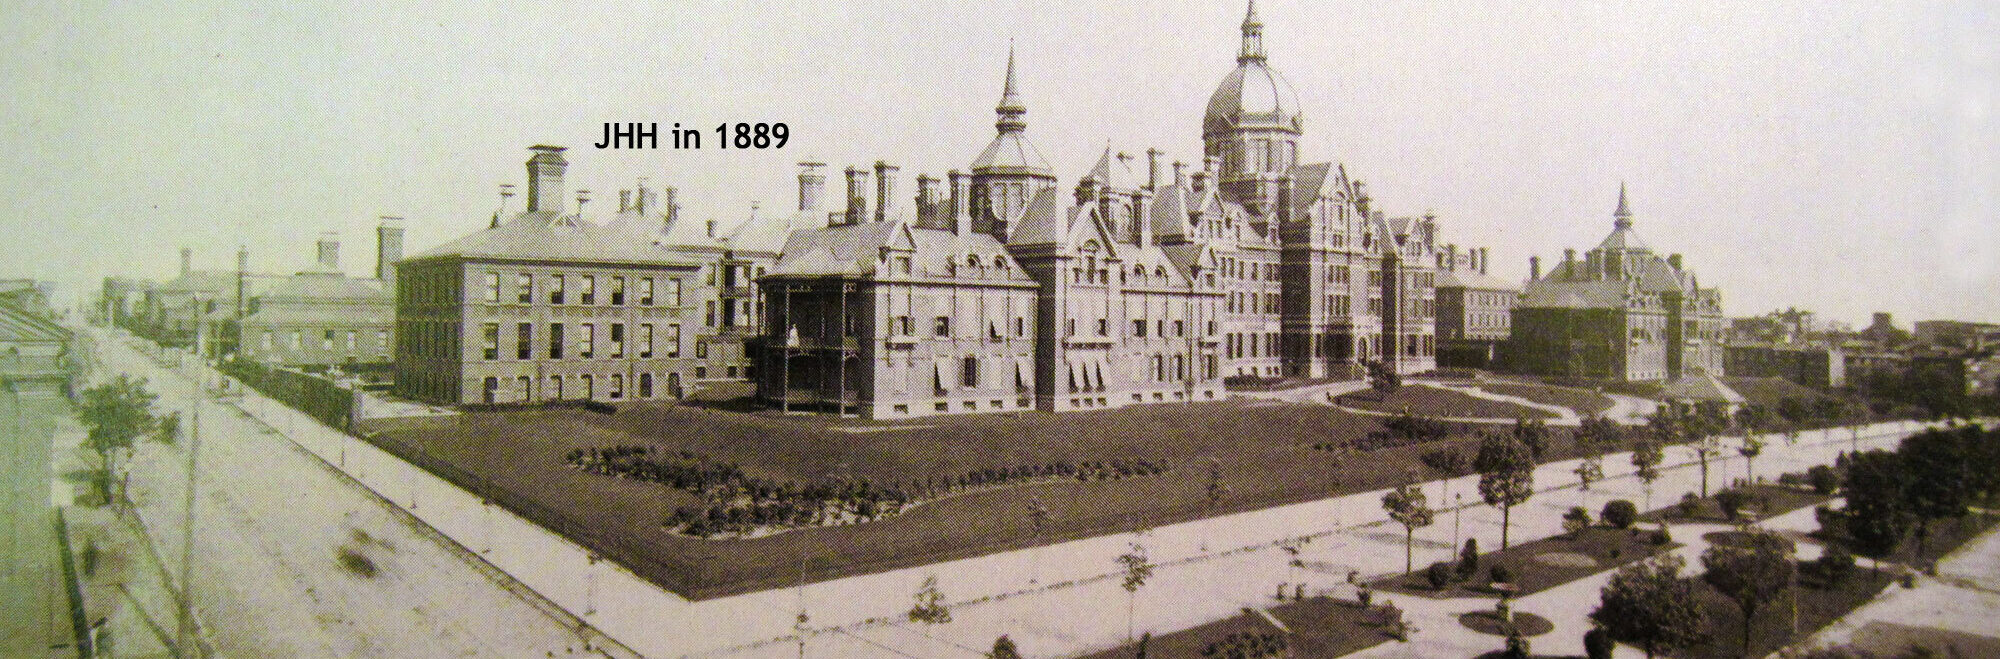 Johns Hopkins Hospital in 1889